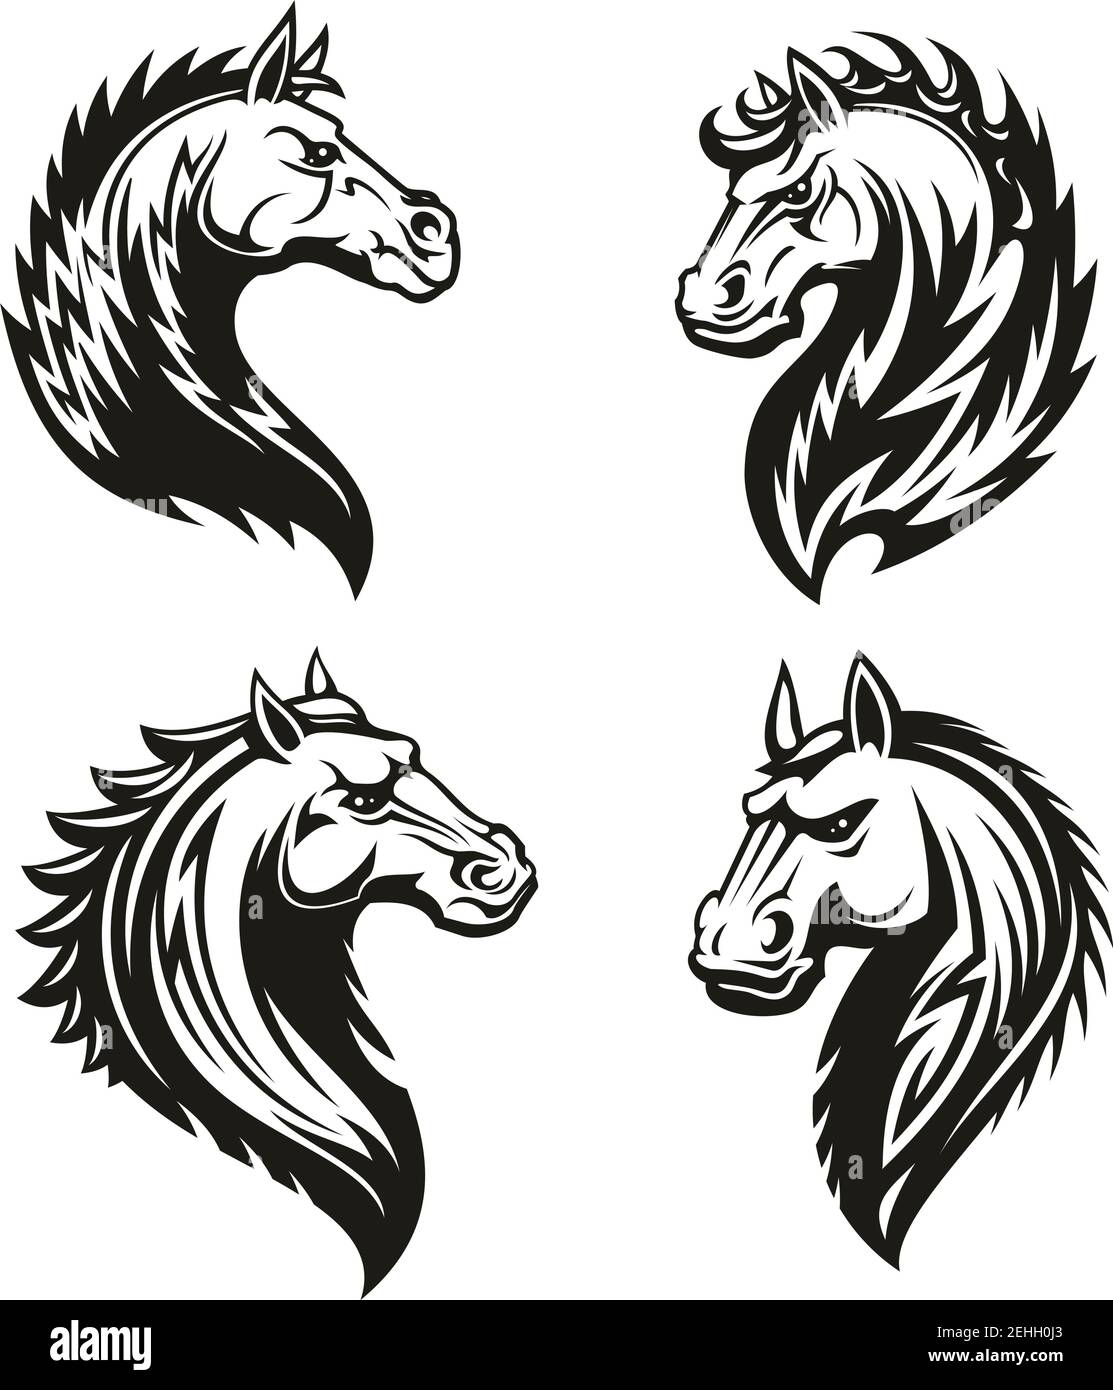 Horse Tribal Tattoo Cool Vektor Design Stock Vector (Royalty Free)  1921428008 | Shutterstock